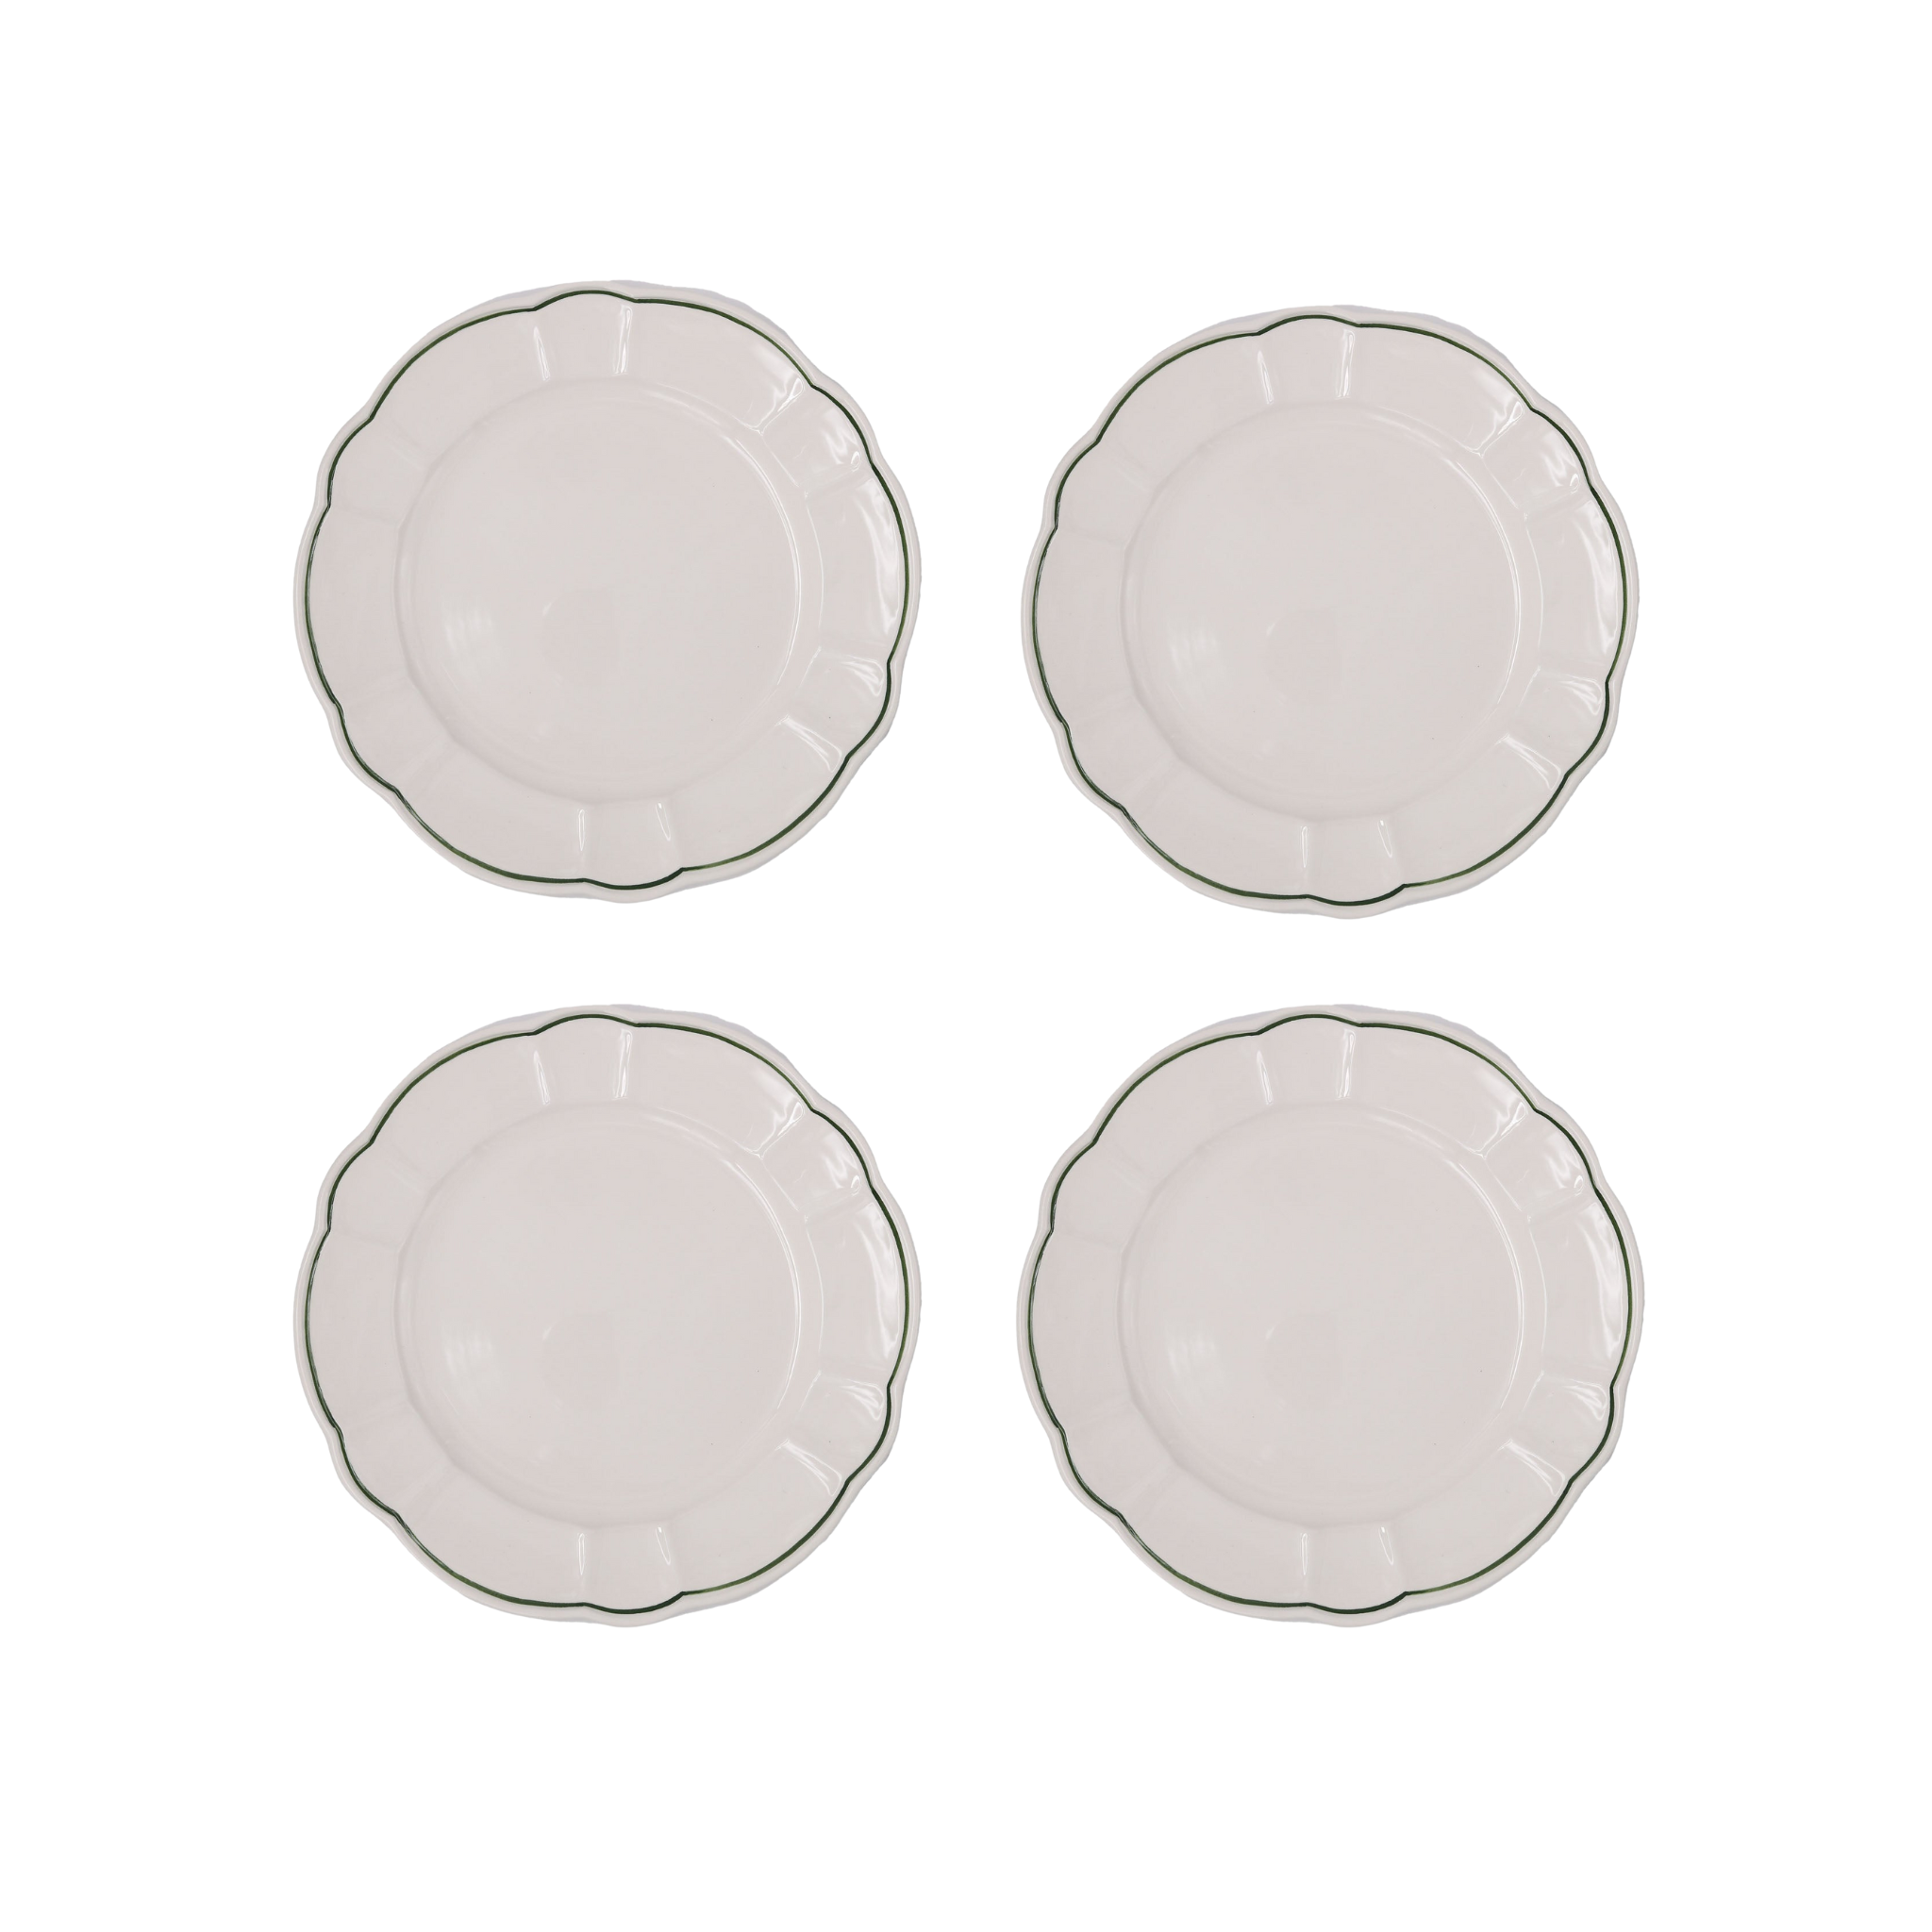 Romilly Dinner Plate, Green, Set of 4 - Skye McAlpine Tavola